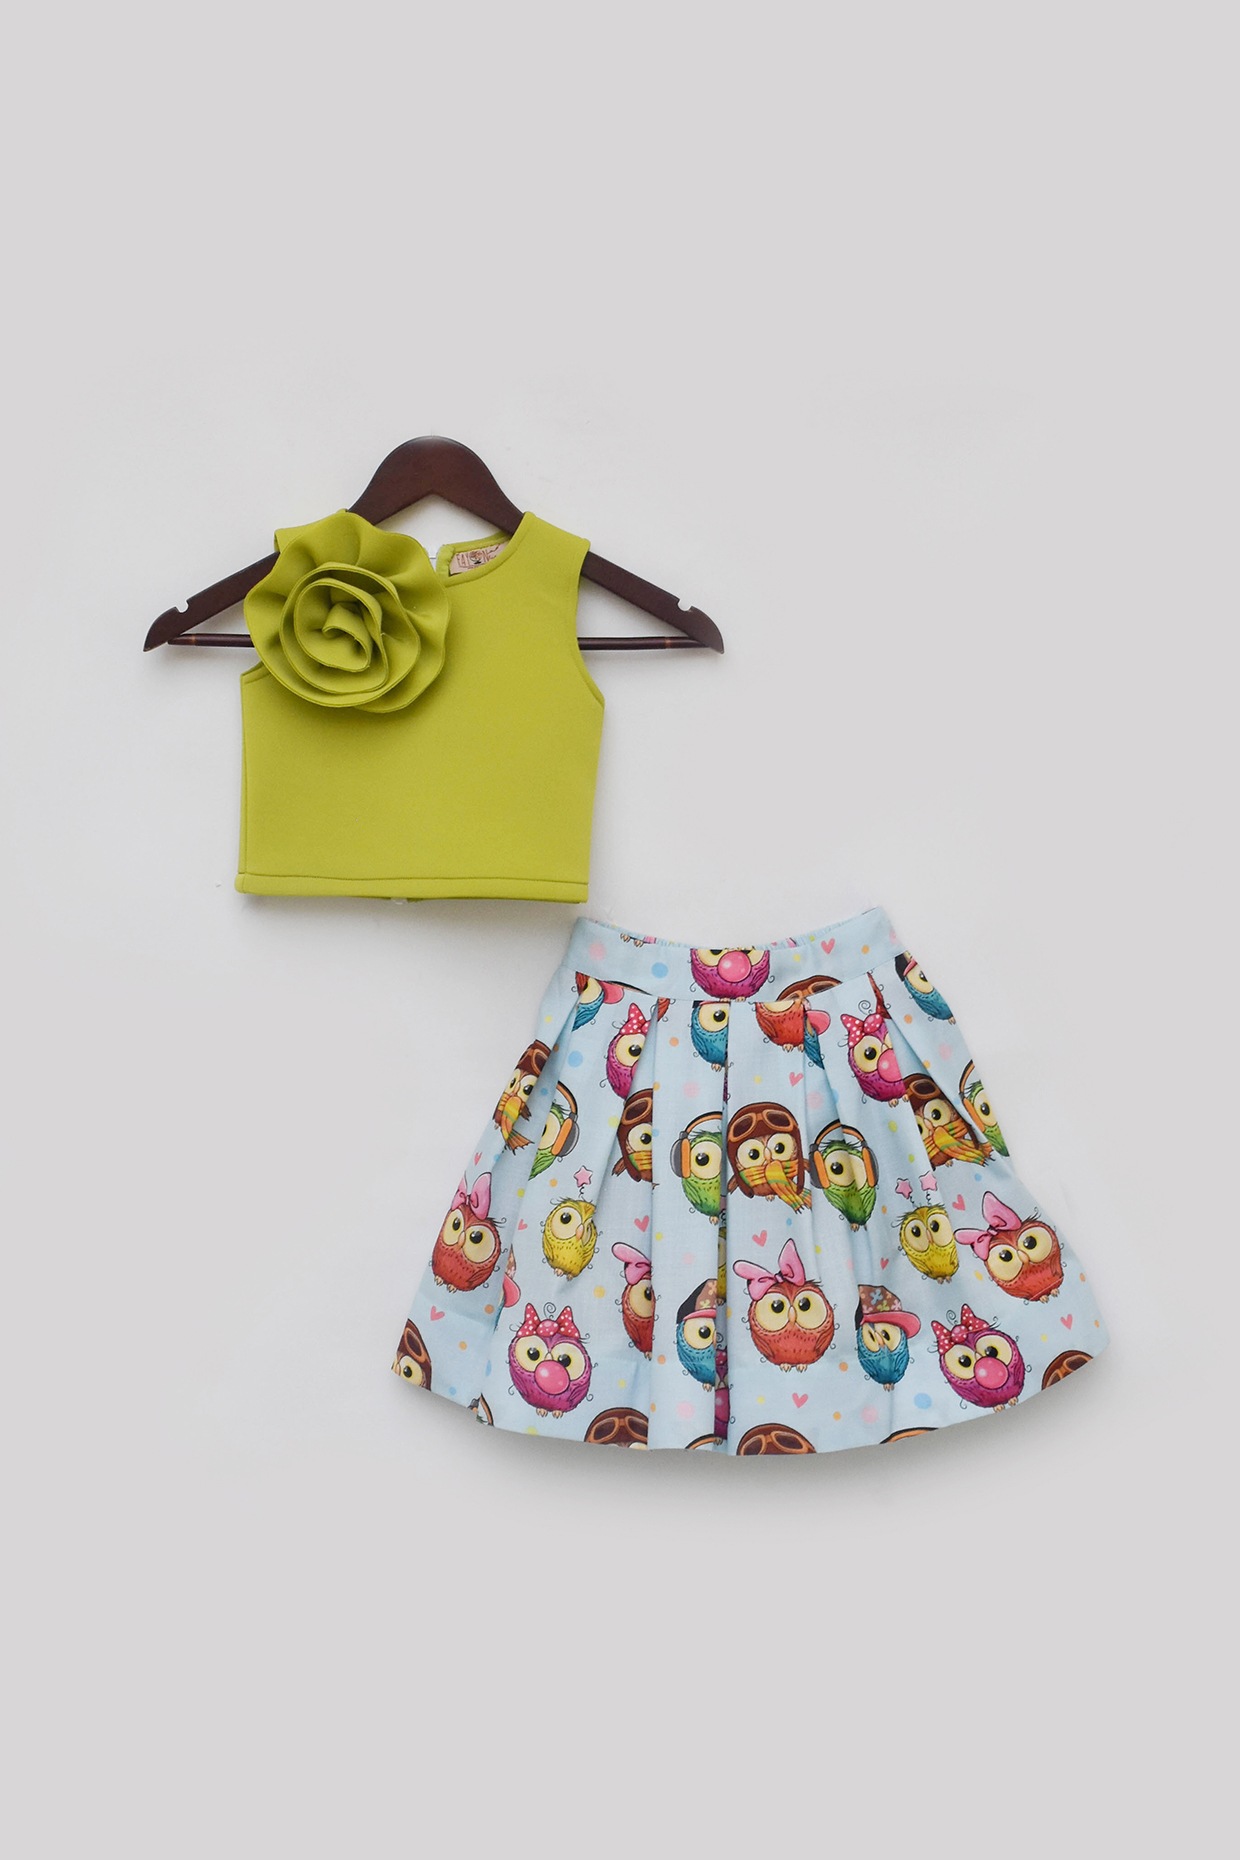 Carter's Baby Girls Infants 3 Pc Cotton Cherry Shirt Bodysuit Skirt Set  Outfit | eBay